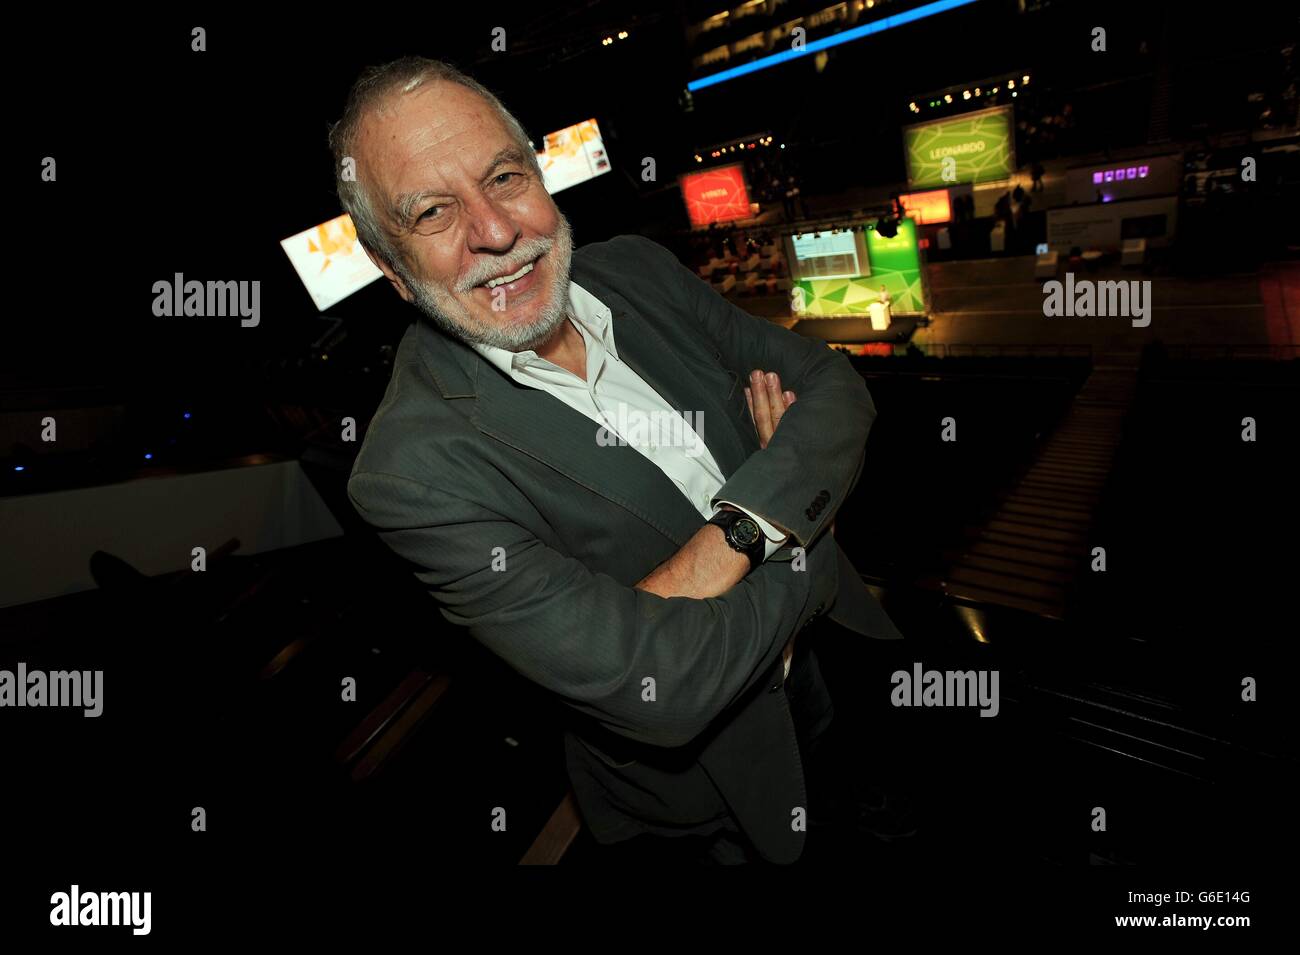 Nolan Bushnell - Atari founder Stock Photo